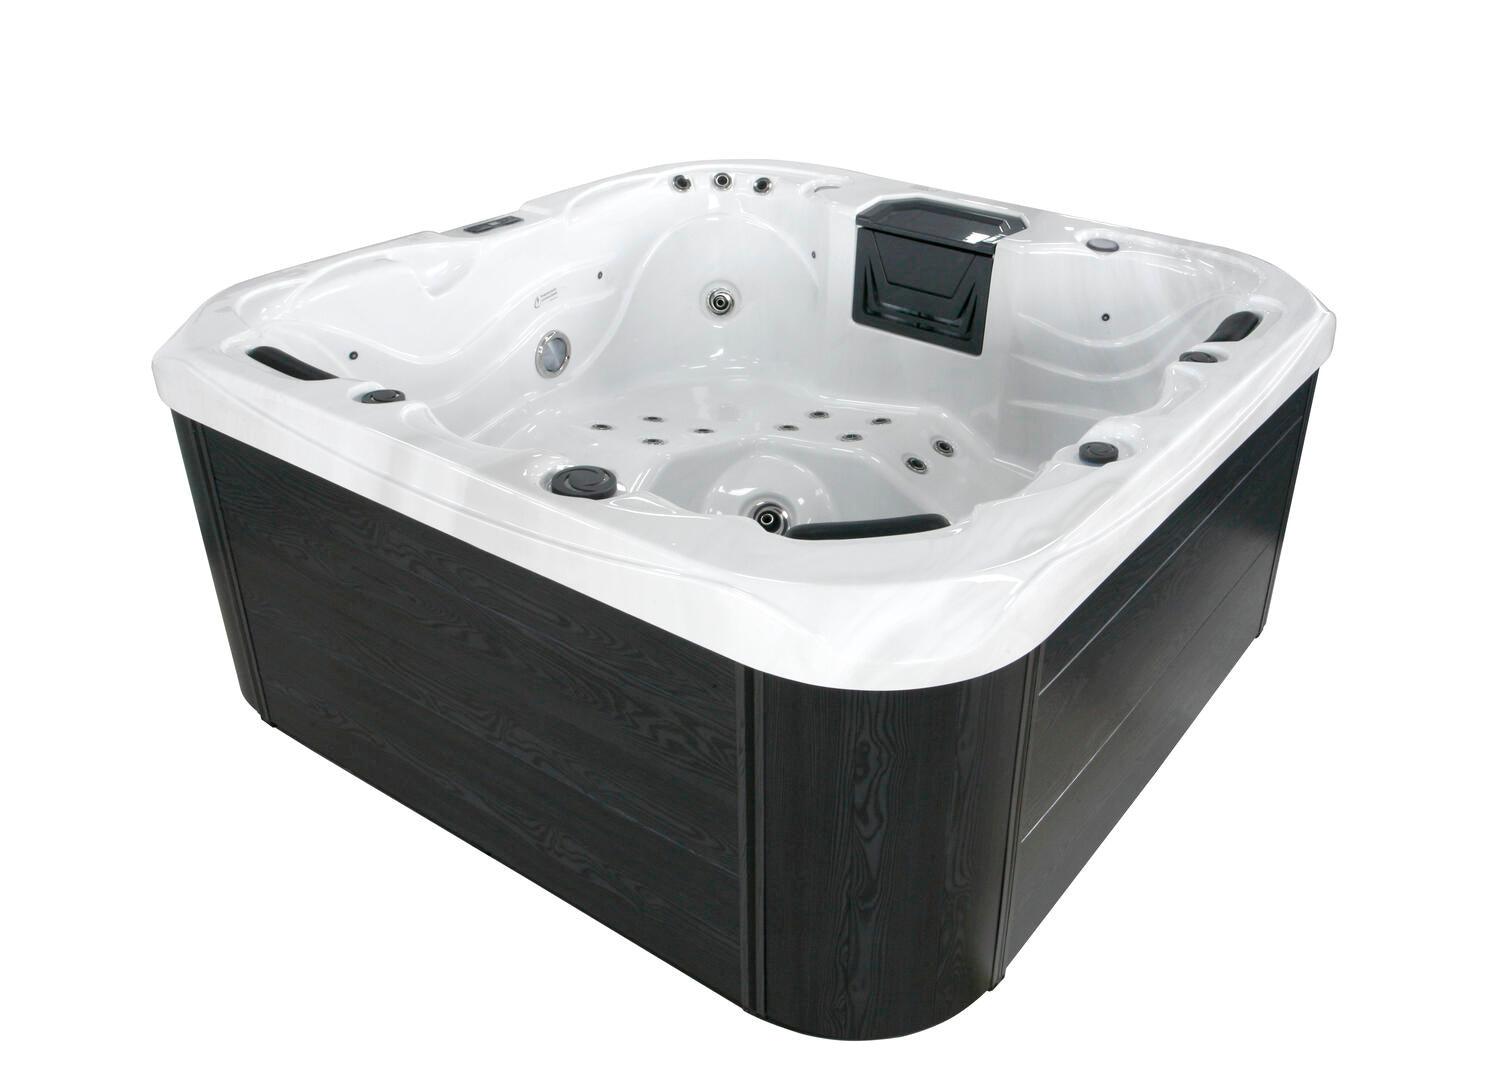 Retreat plus hot tub, in white- white background